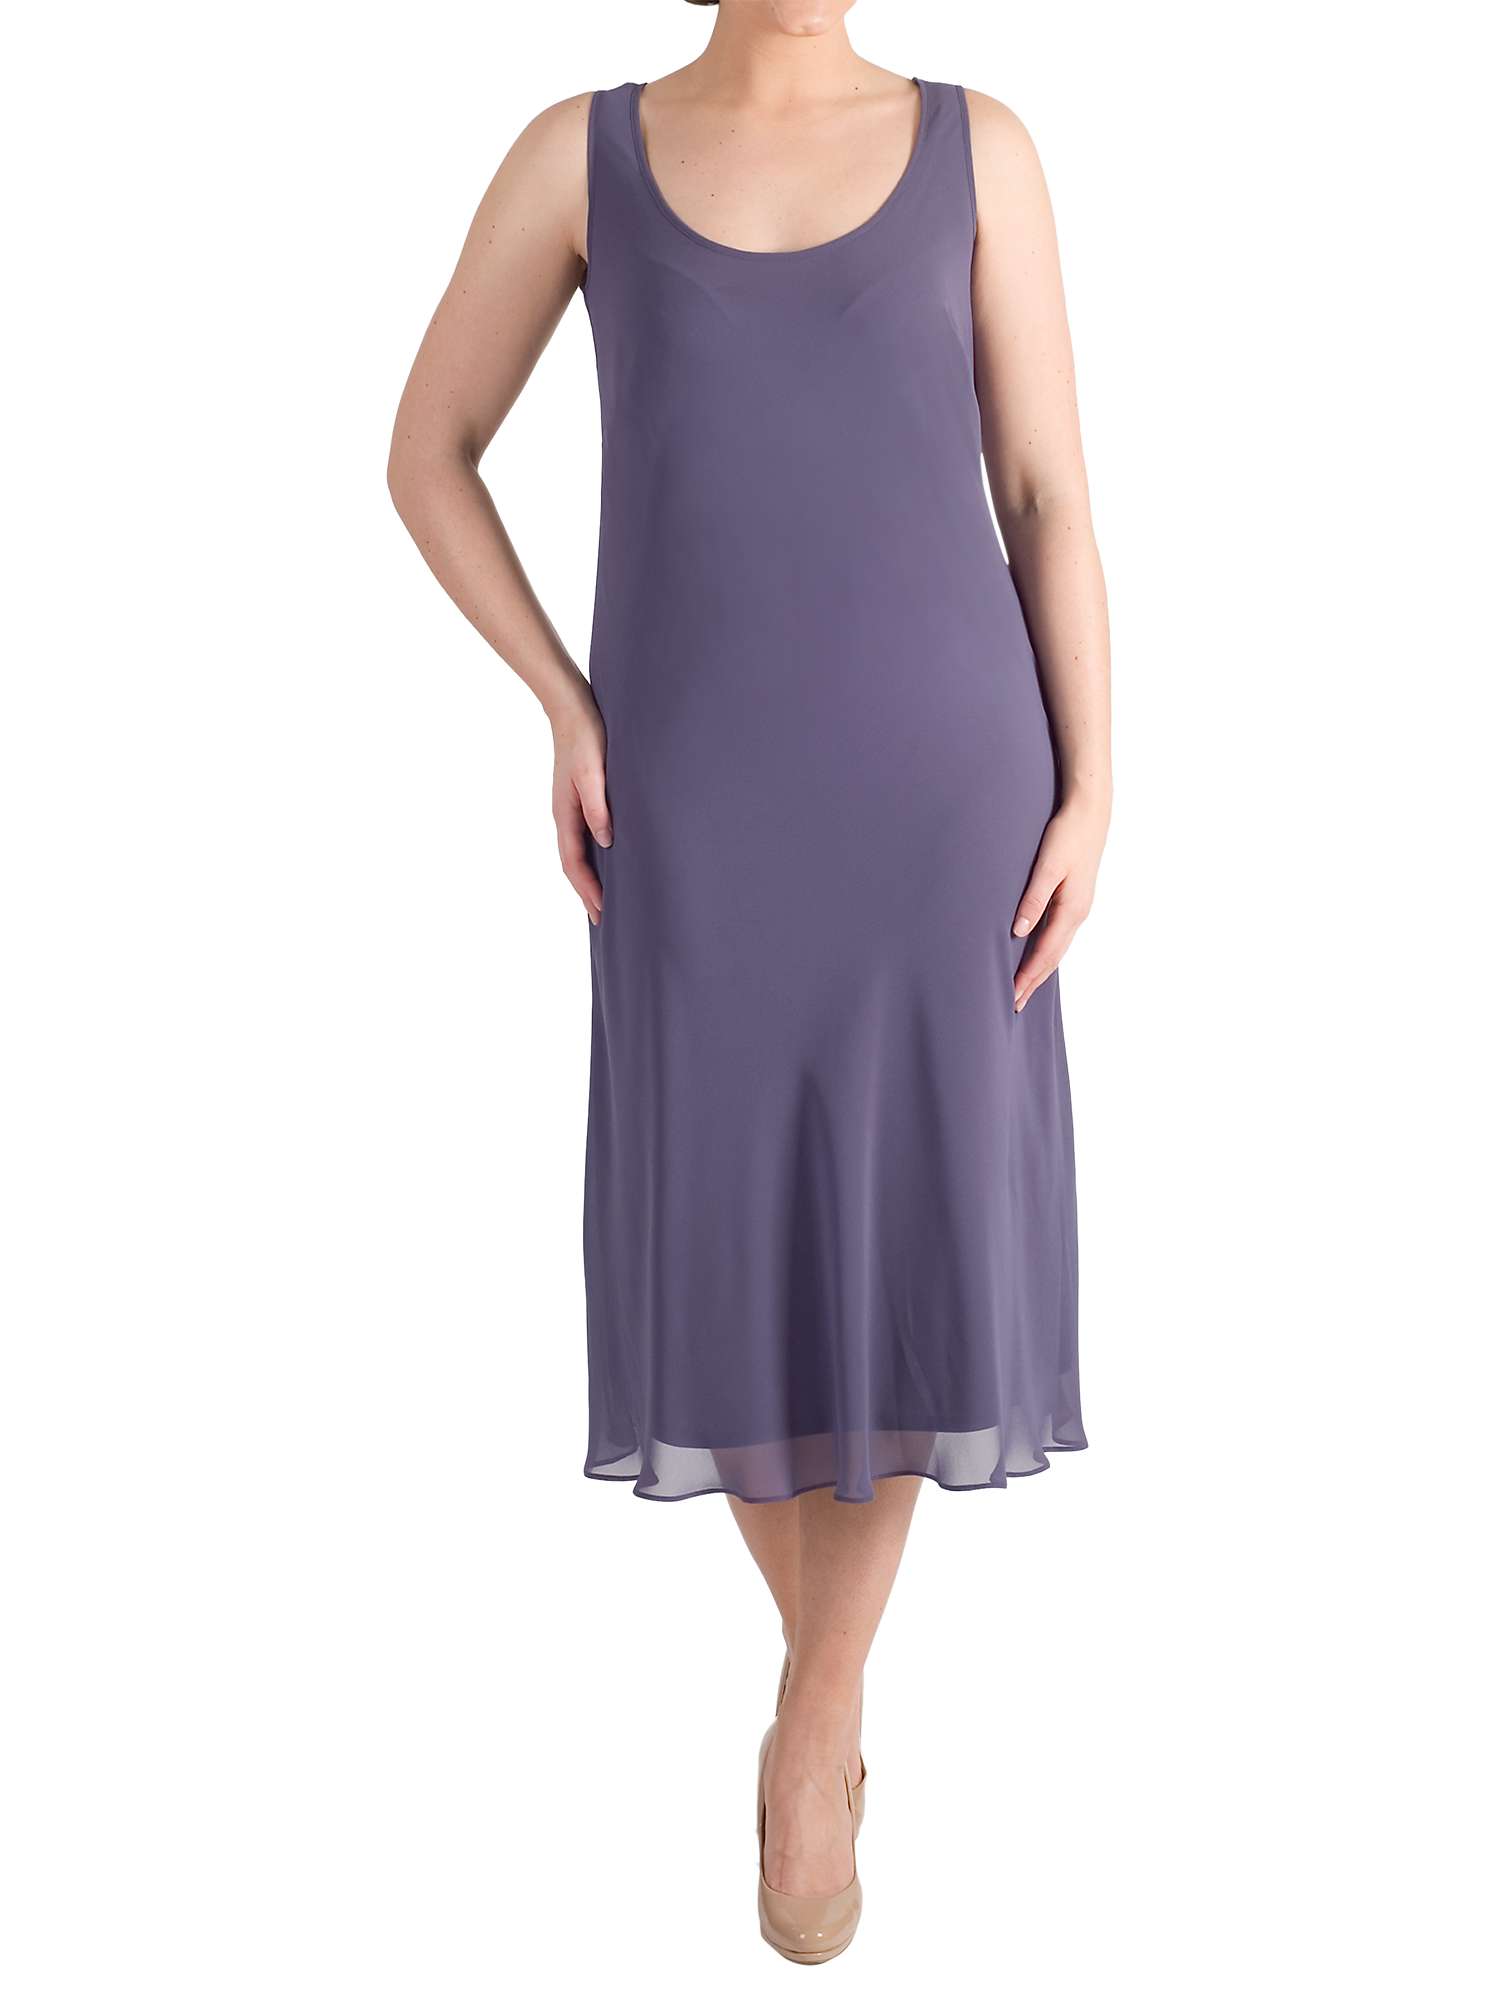 Buy Chesca Chiffon Dress, Hyacinth Online at johnlewis.com